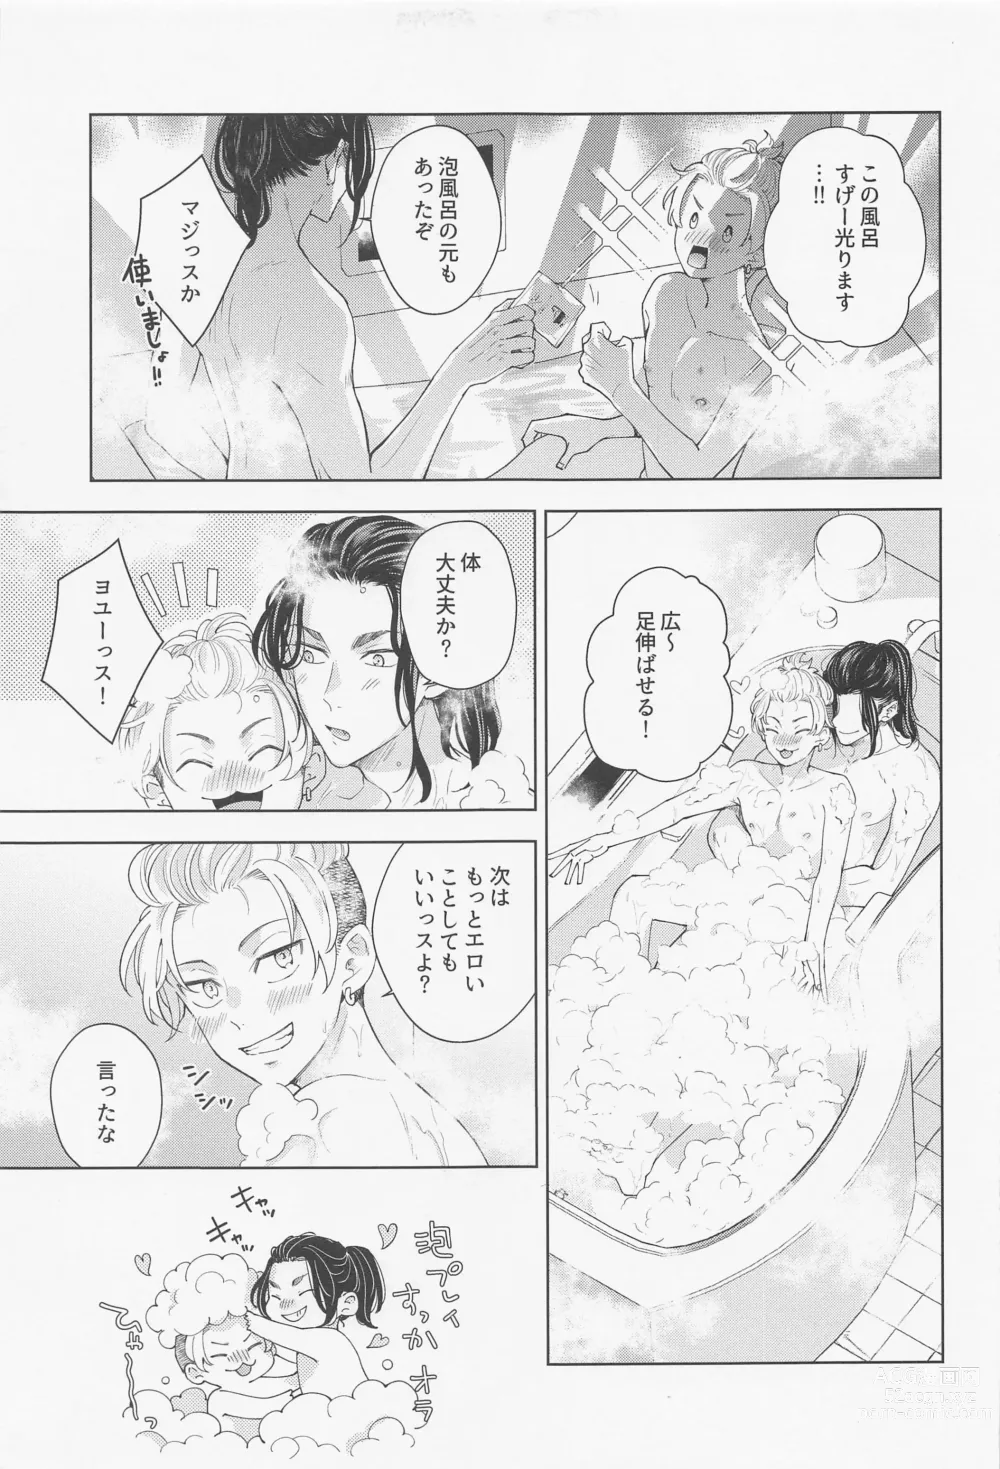 Page 62 of doujinshi Hopeless Romantic